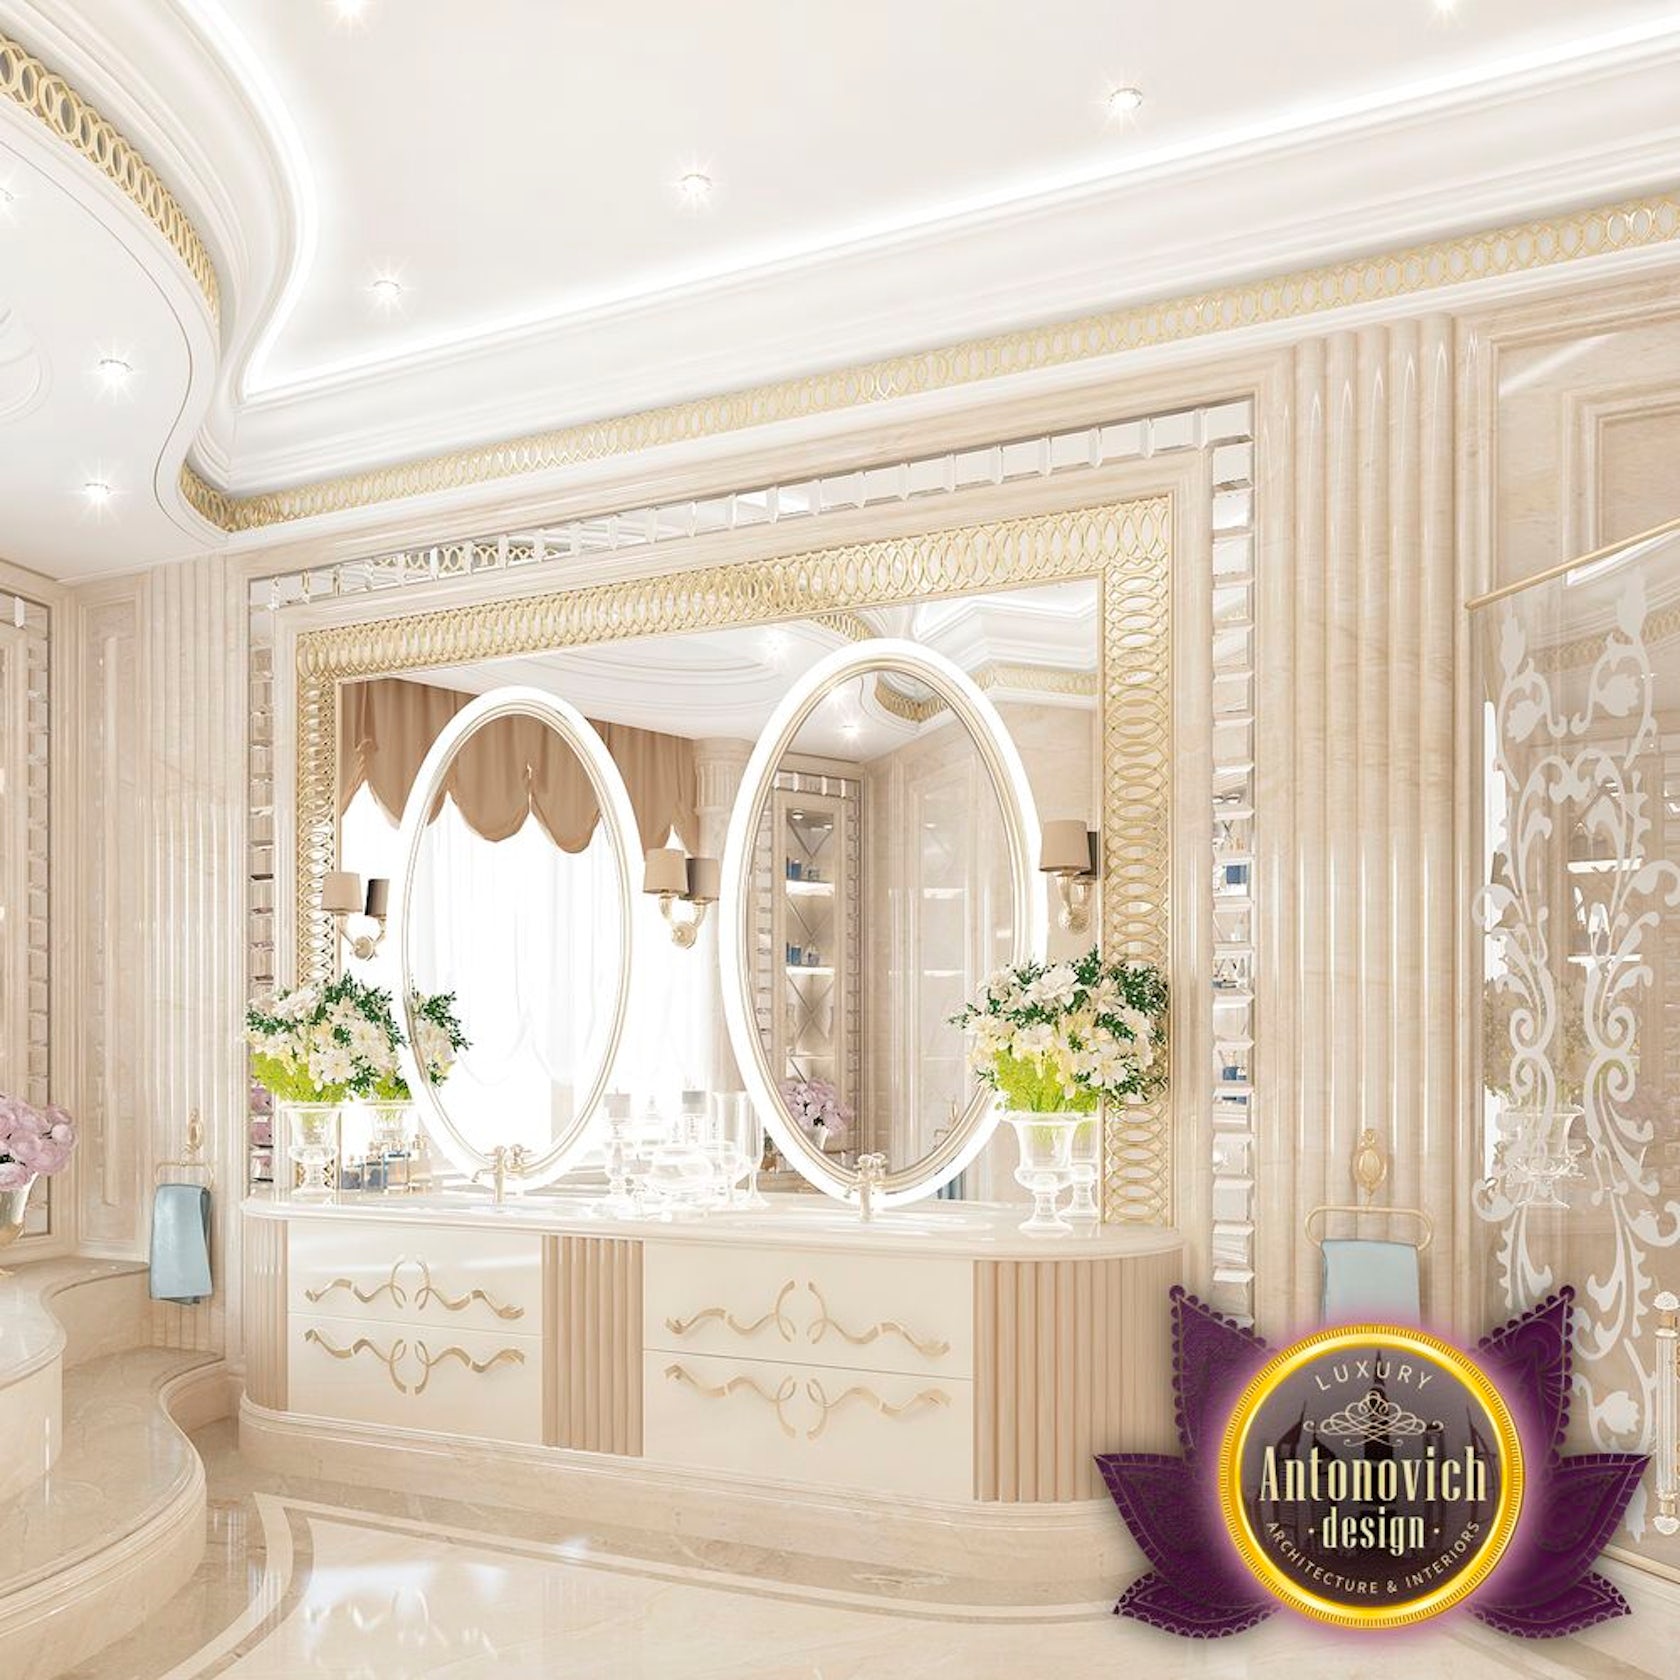 The Bathroom Interior Of Luxury Antonovich Design On Architizer